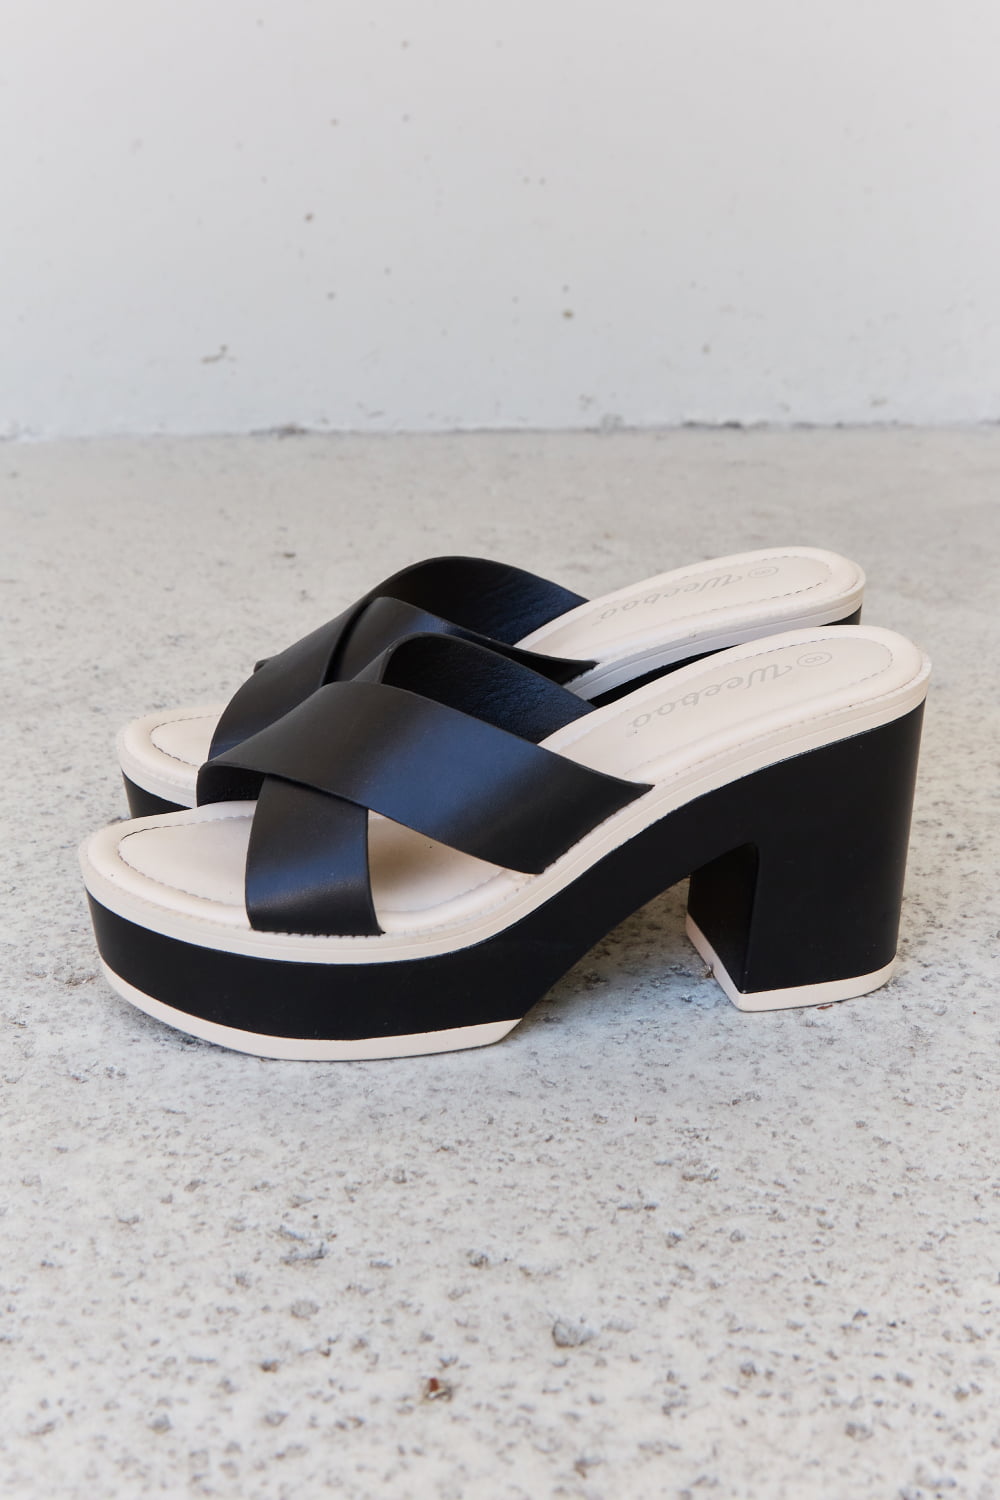 Contrast Platform Sandals in BlackSandalsWeeboo